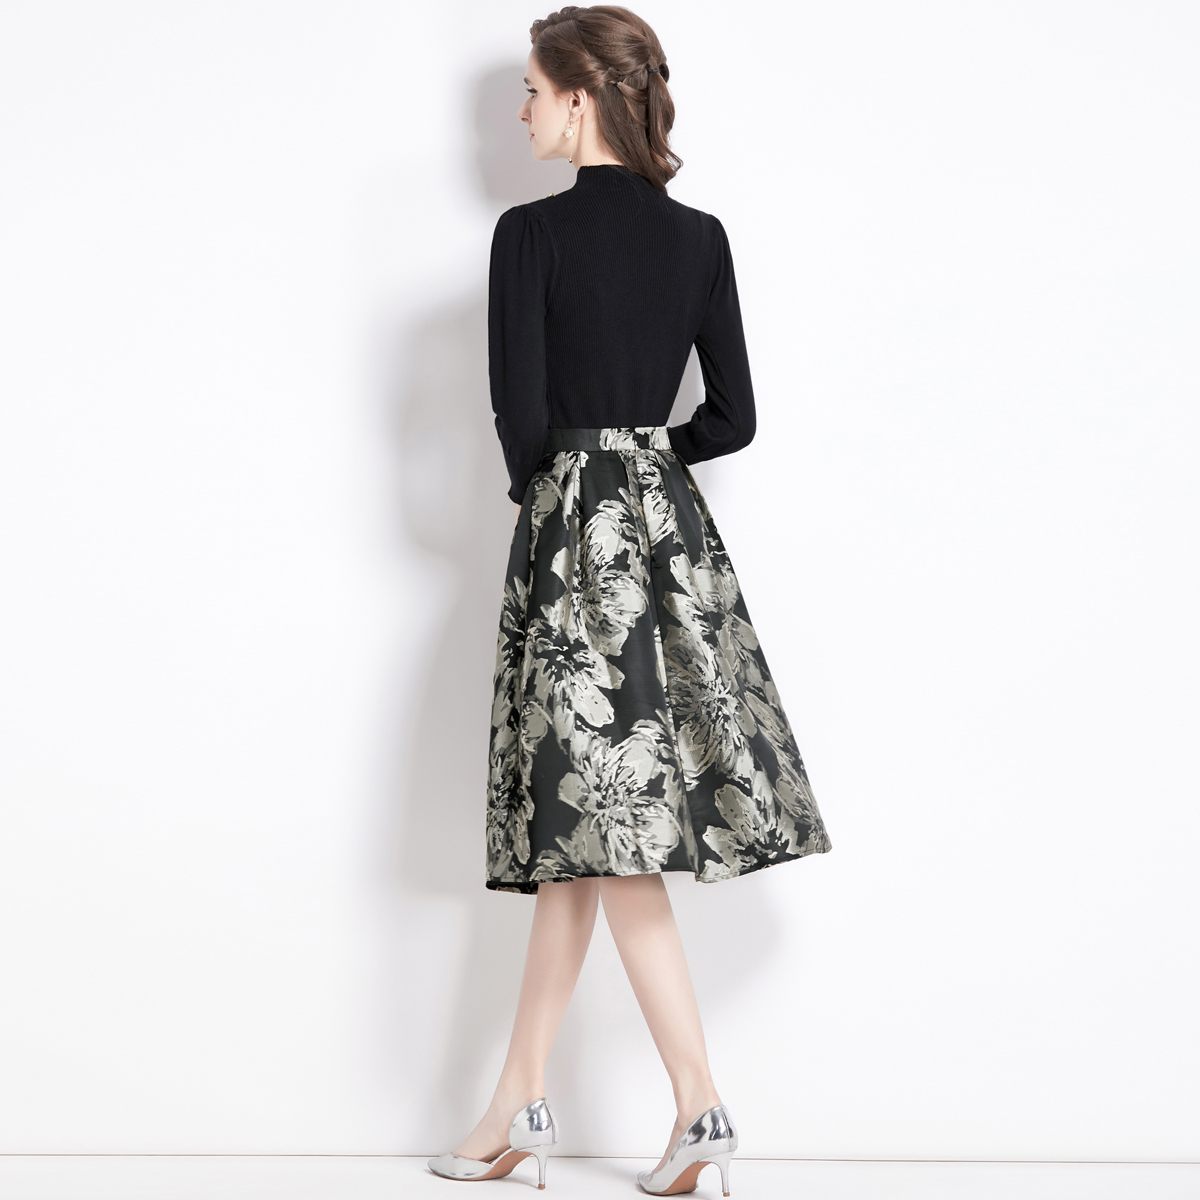 Hepburn style autumn sweater retro slim skirt 2pcs set